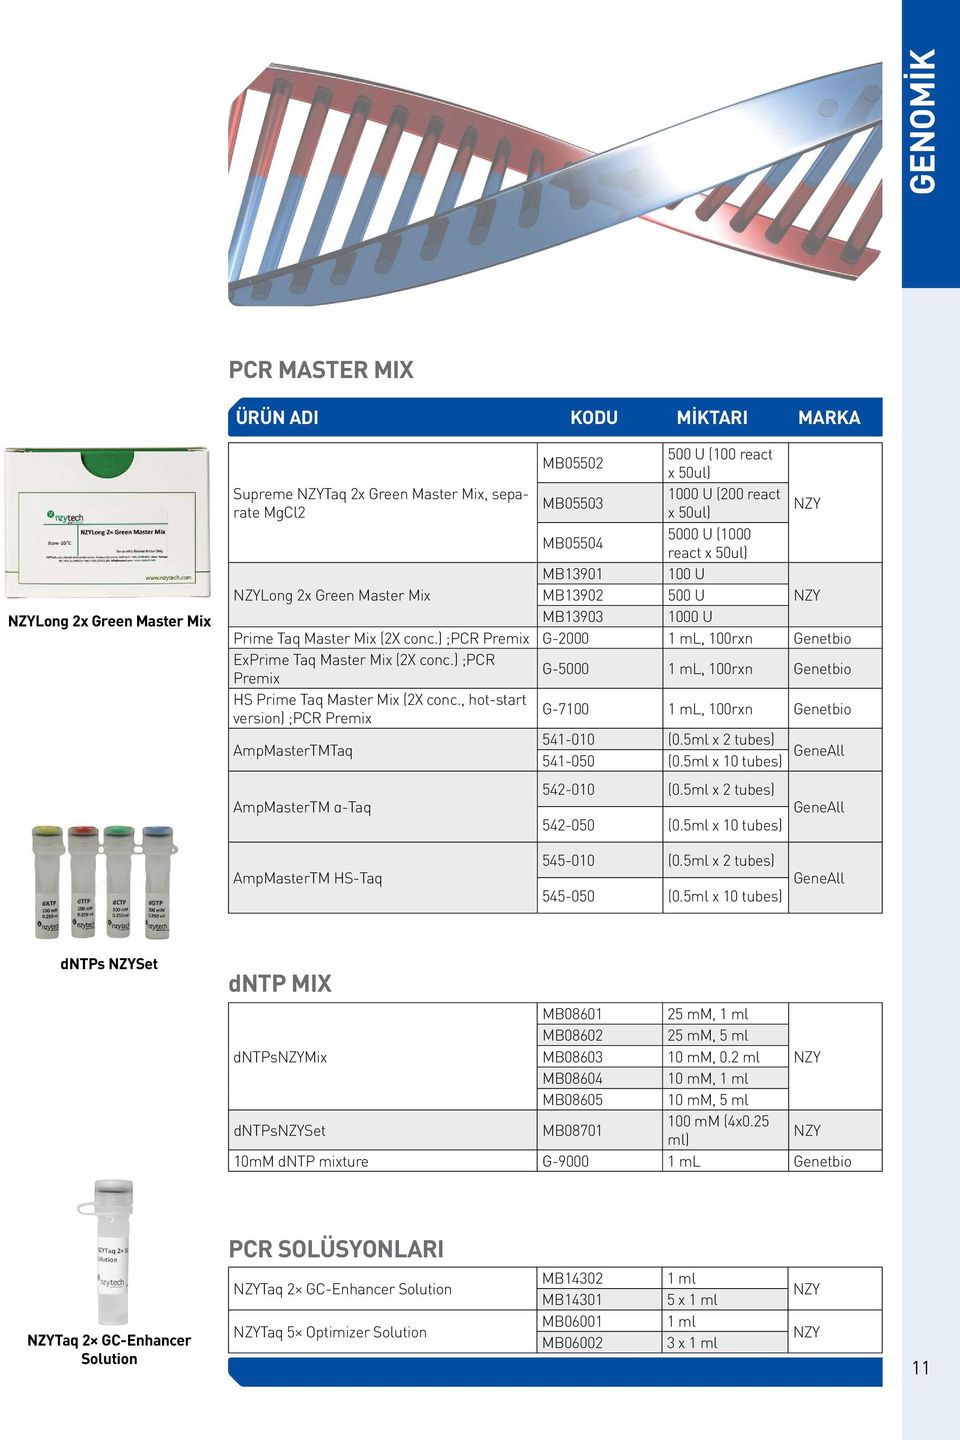 ) ;PCR Premix G-5000 1 ml, 100rxn Genetbio HS Prime Taq Master Mix (2X conc., hot-start version) ;PCR Premix G-7100 1 ml, 100rxn Genetbio AmpMasterTMTaq 541-010 (0.5ml x 2 tubes) 541-050 (0.